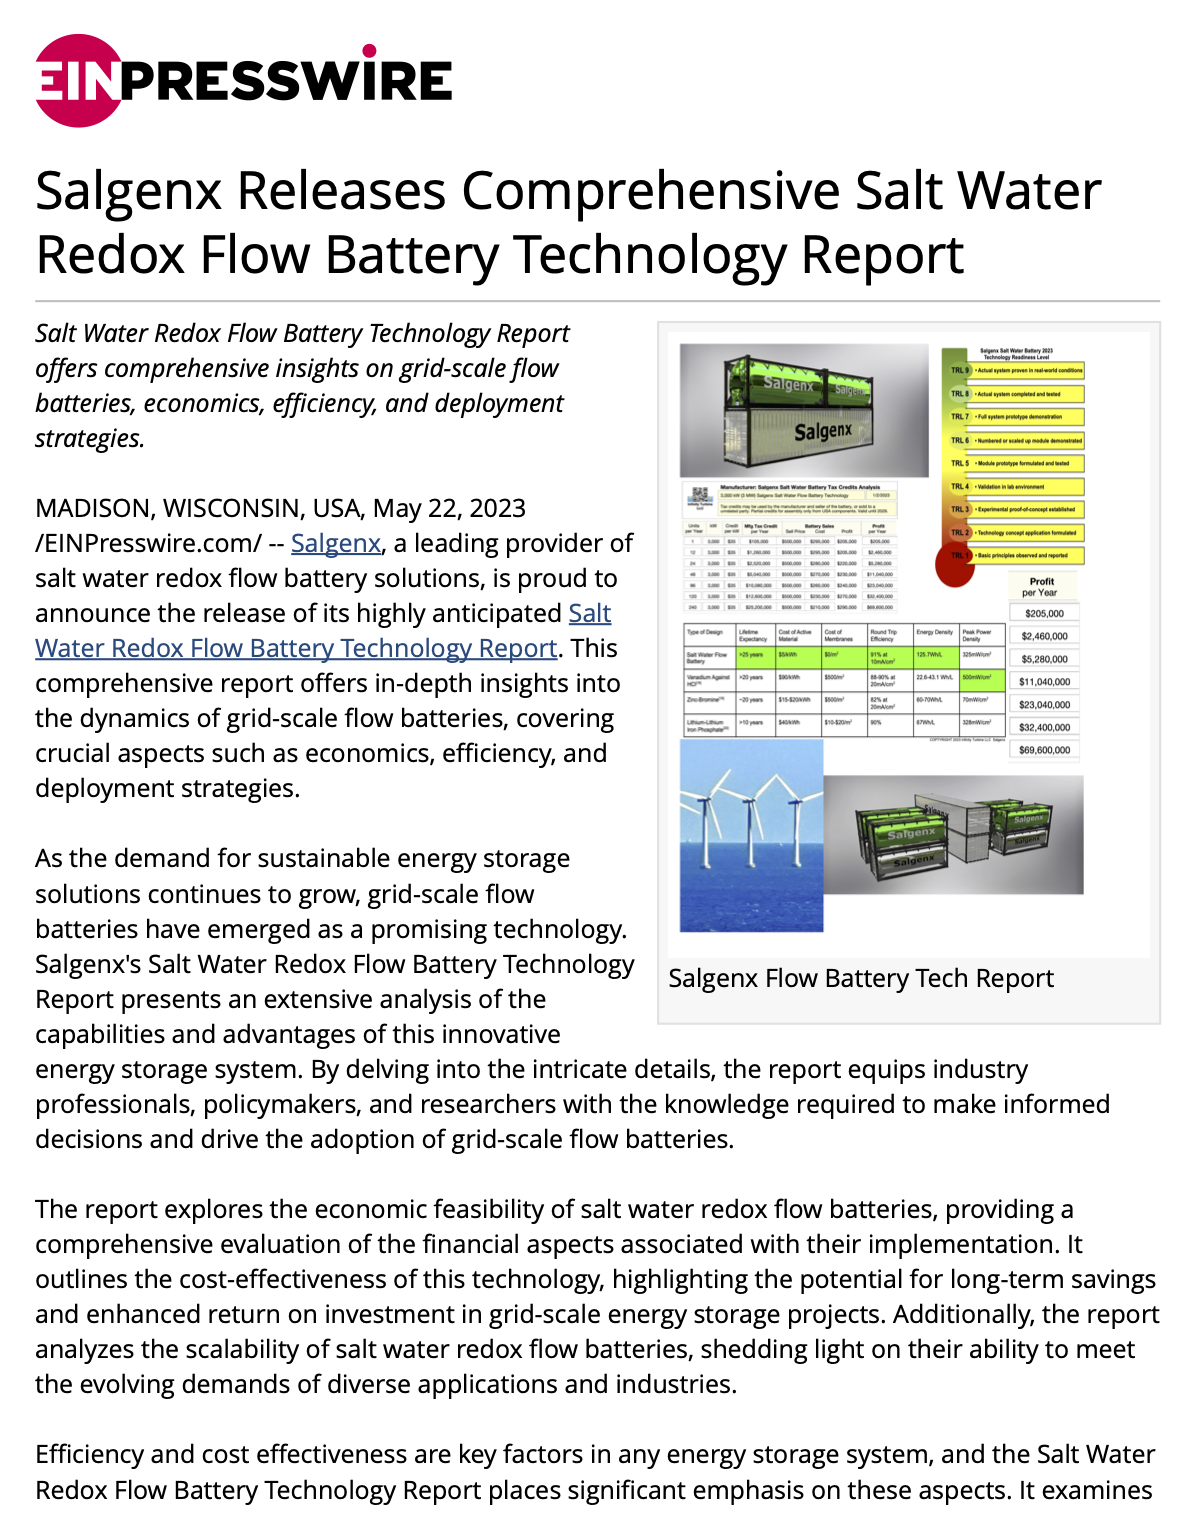 Salgenx Releases Comprehensive Salt Water Redox Flow Battery Technology Report